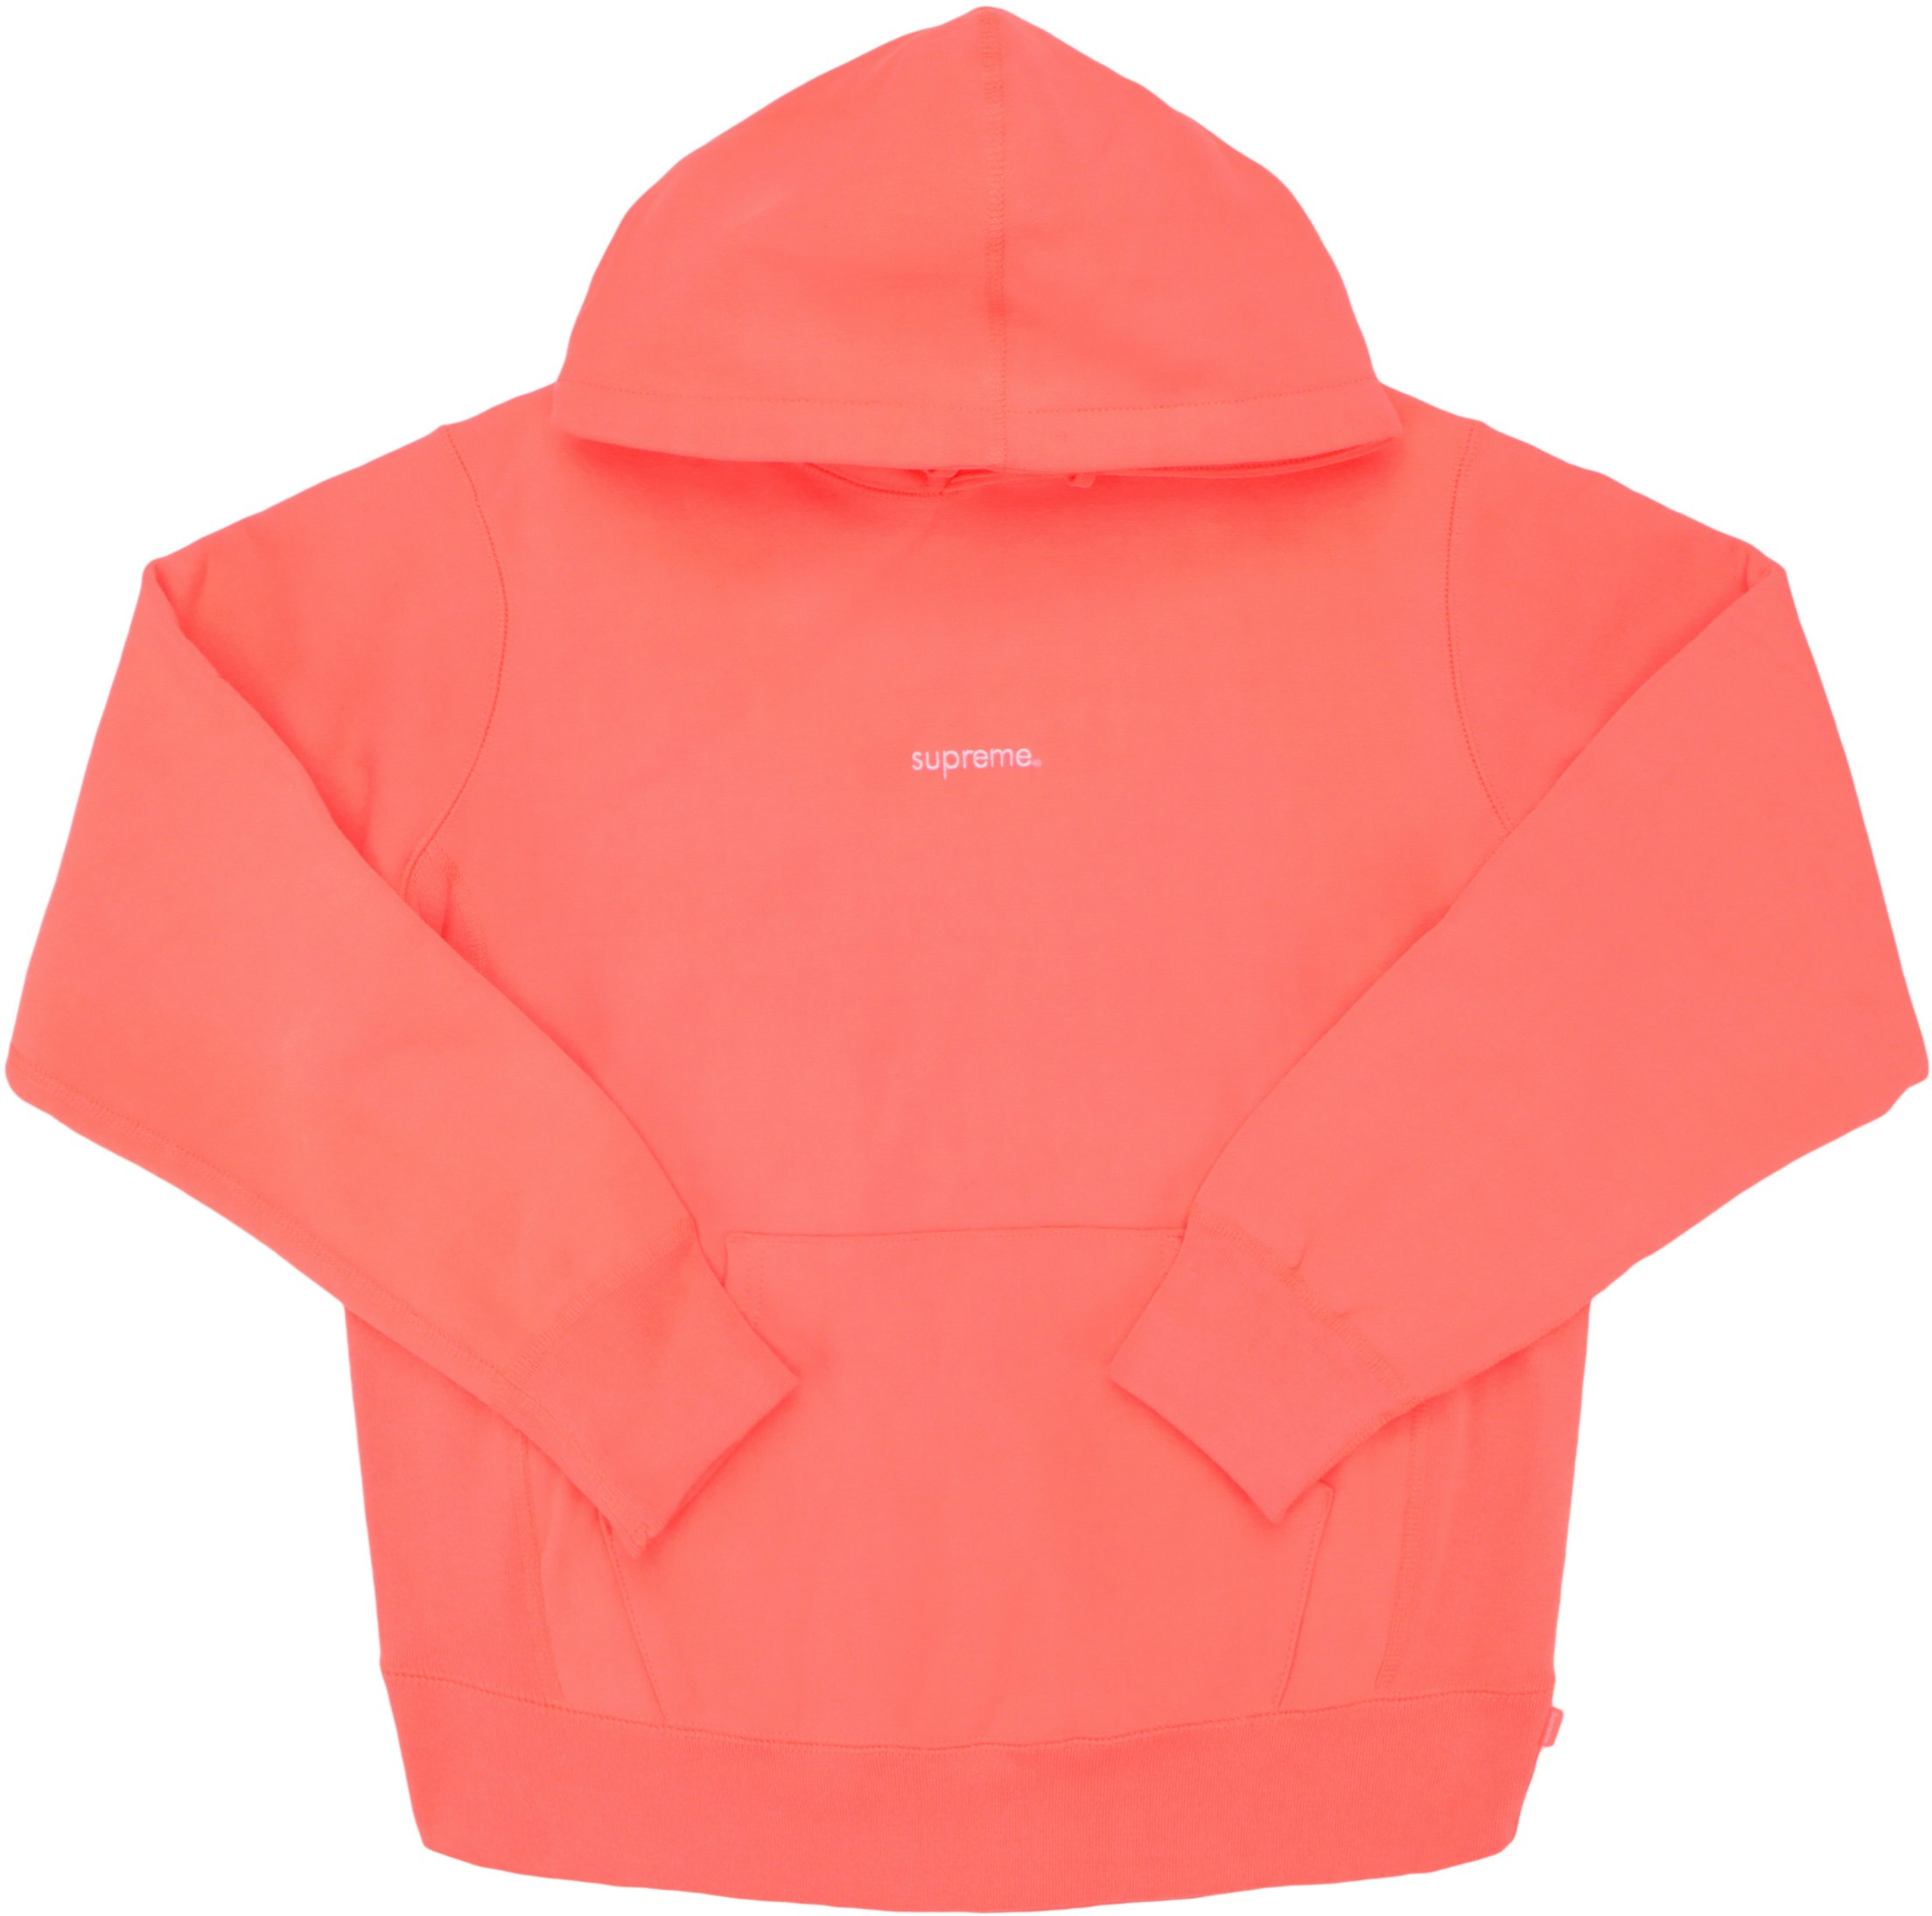 Supreme Trademark Hooded Sweatshirt Fluorescent Pink - Novelship